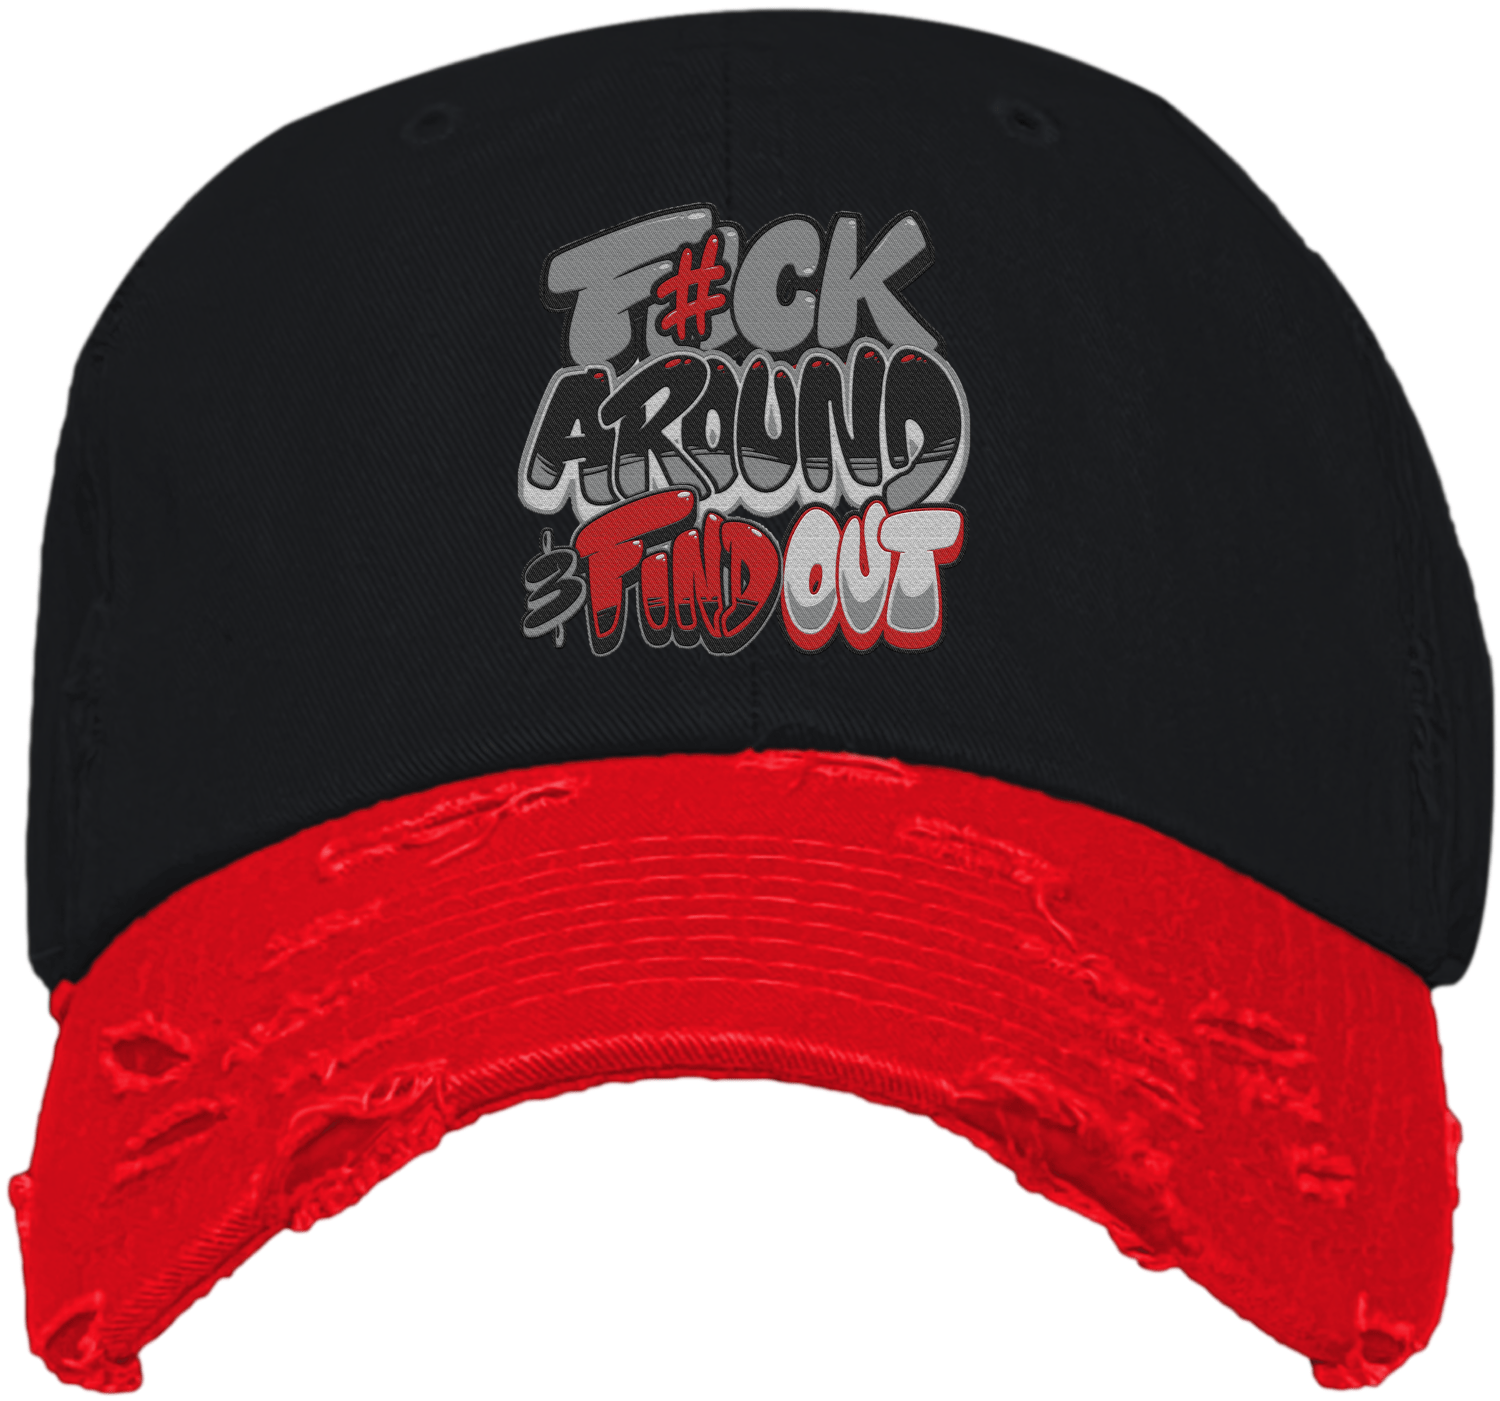 Bred 4s Dad Hat - Jordan 4 Bred Reimagined Hats - Red F#ck